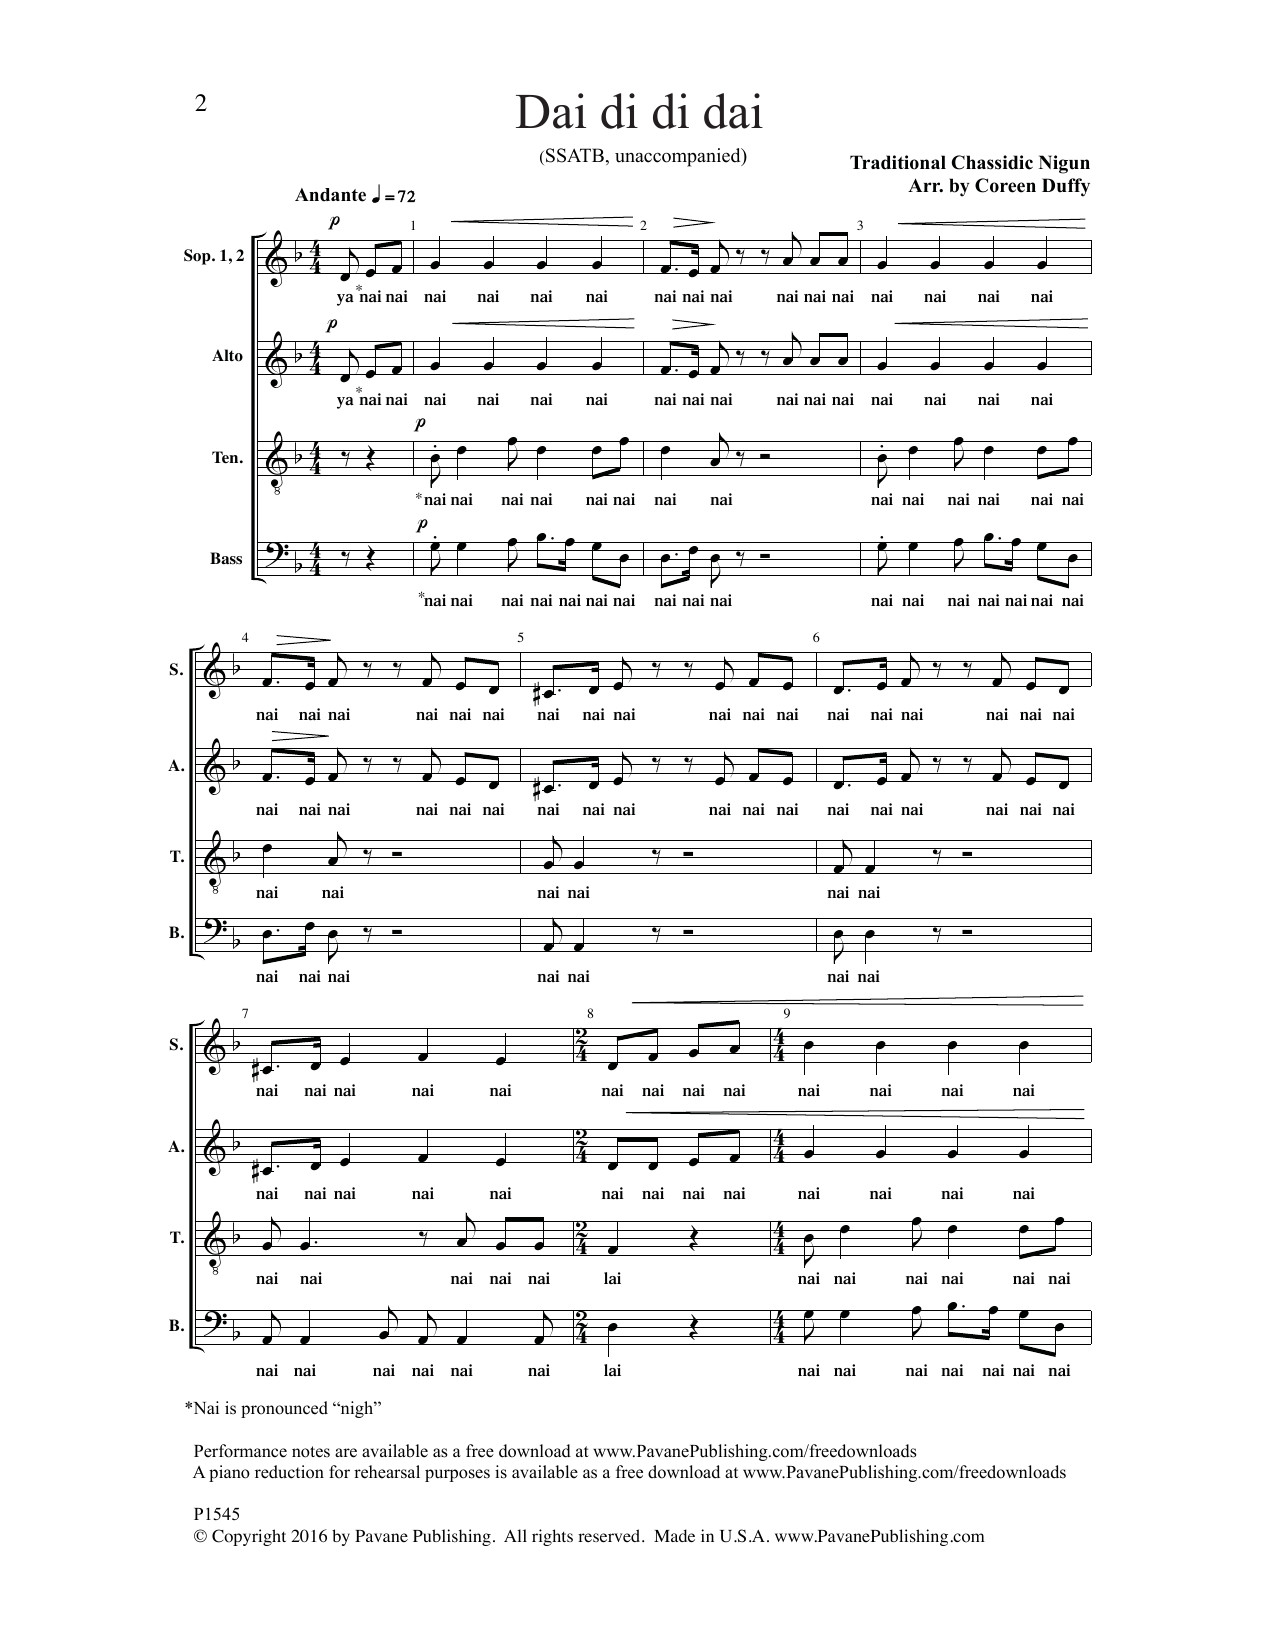 Download Coreen Duffy Dai Di Di Dai Sheet Music and learn how to play Choir PDF digital score in minutes